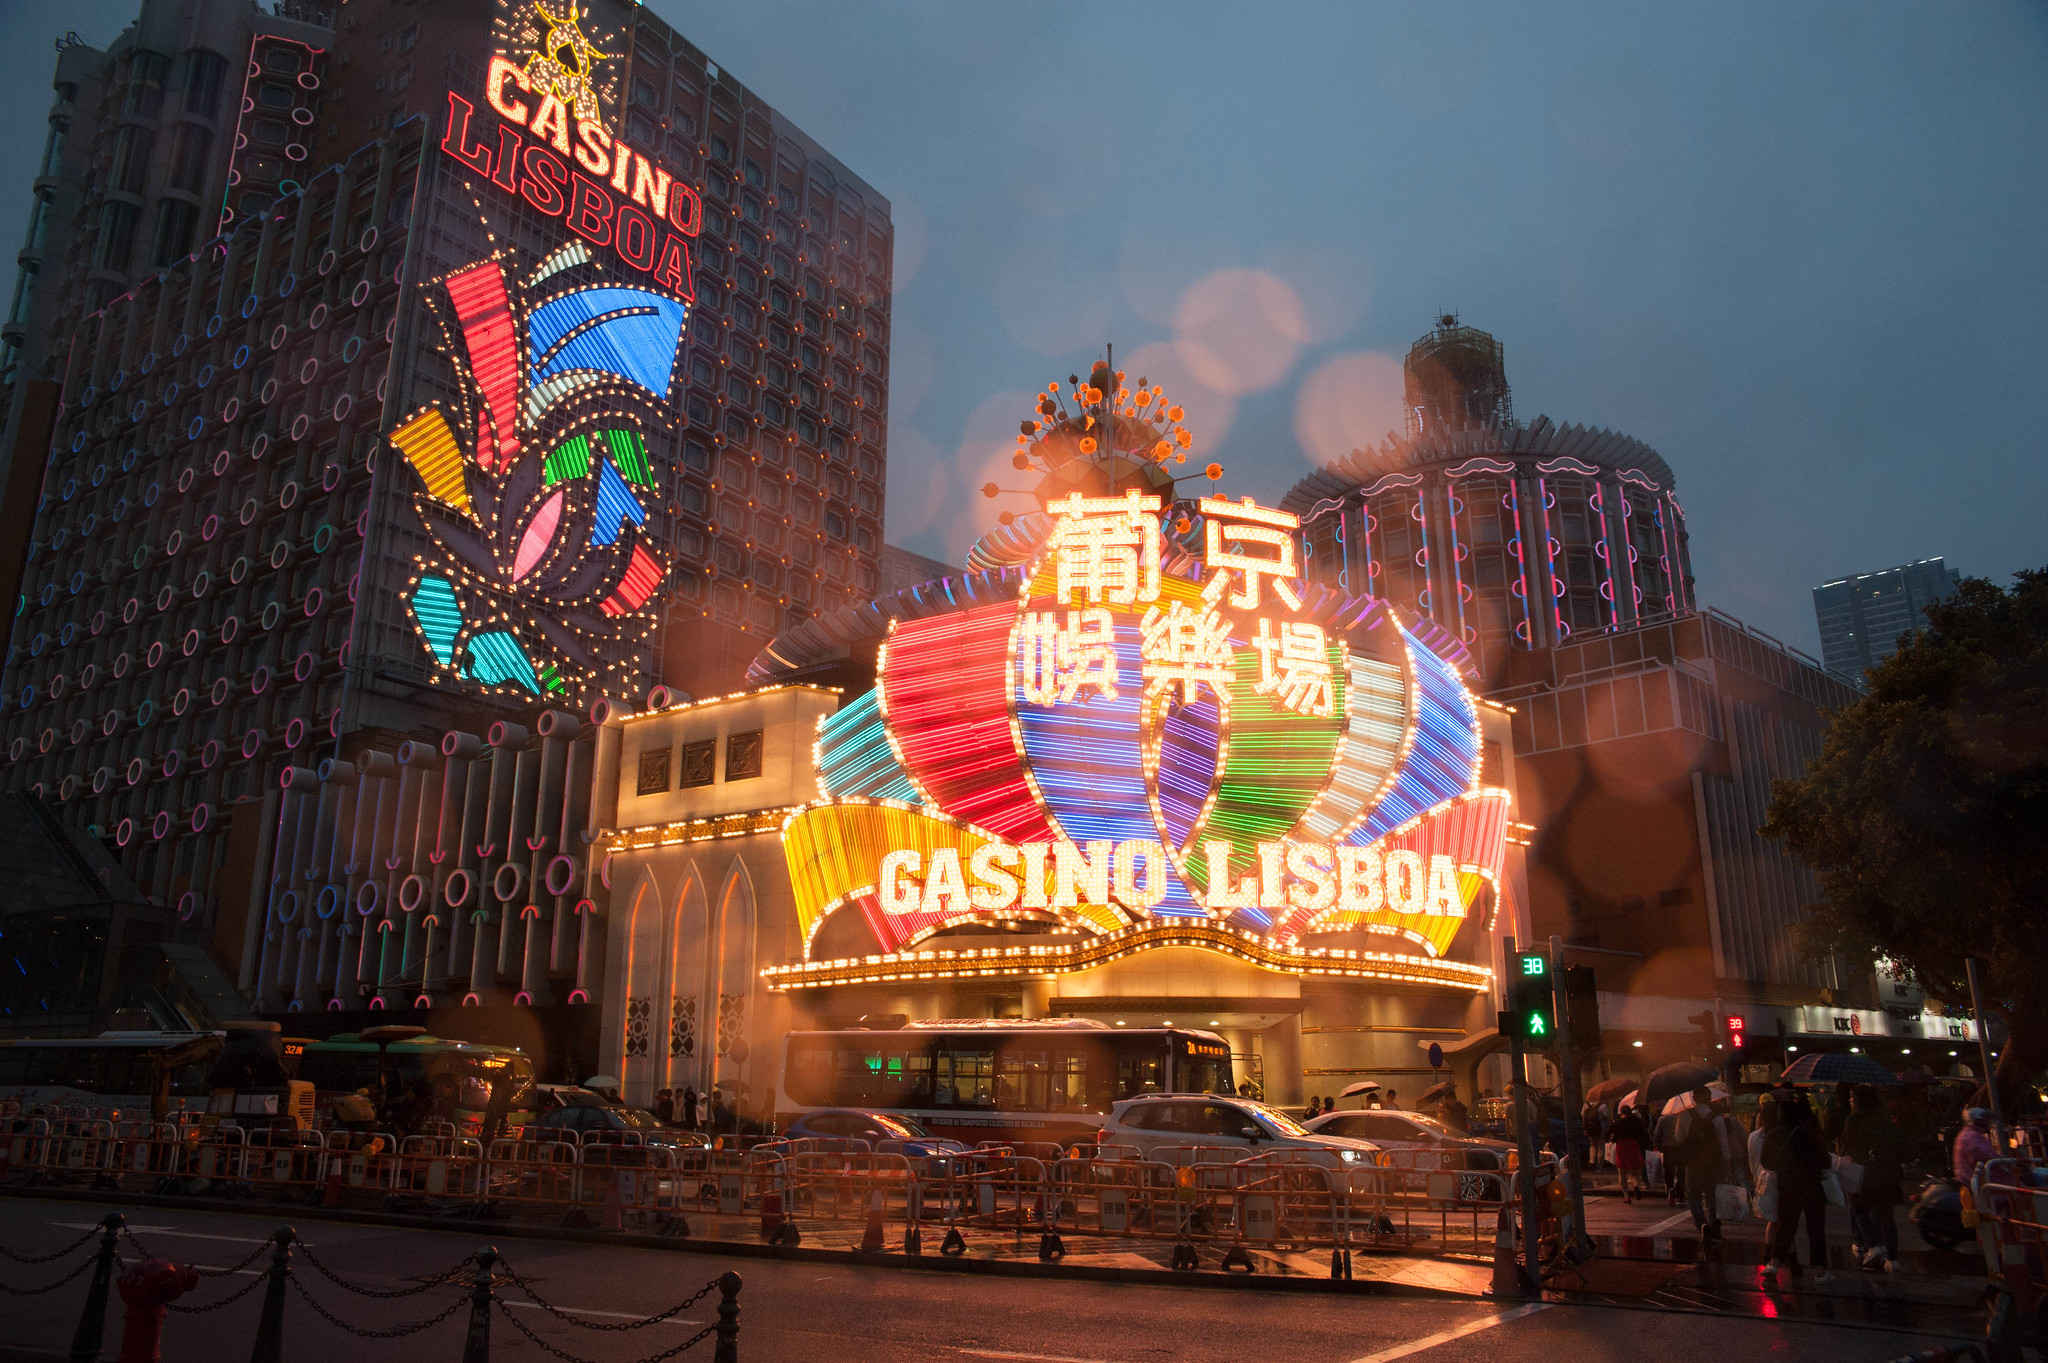 Casino Lisboa Macau